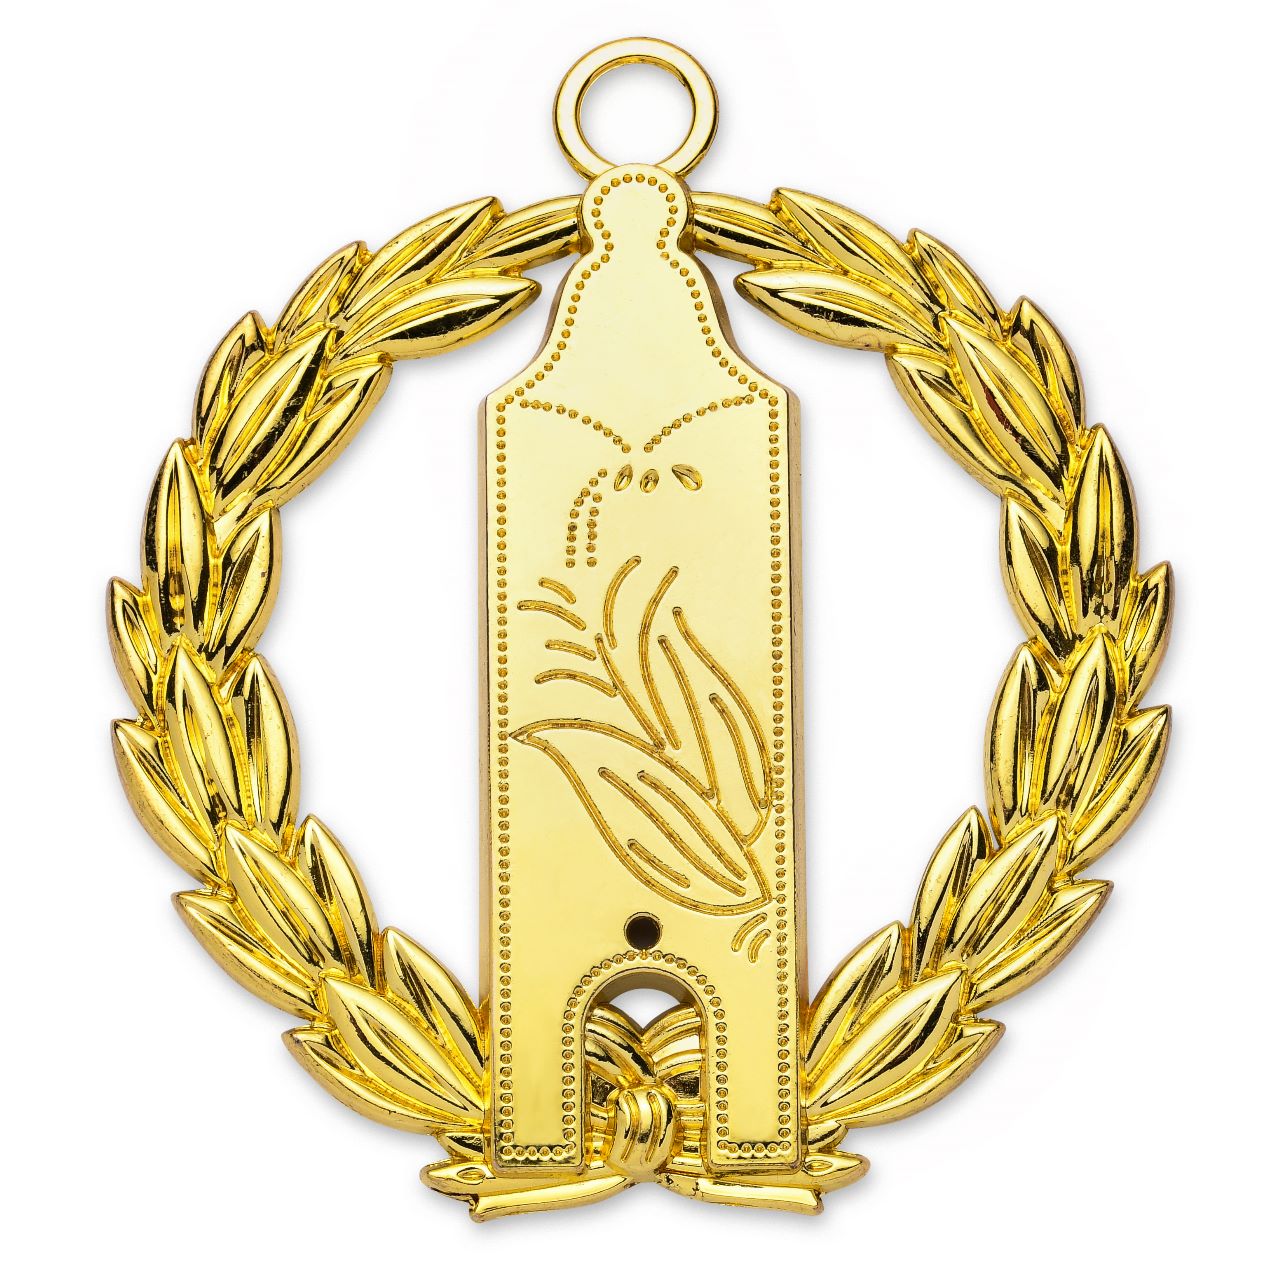 Grand Junior Warden Blue Lodge Officer Collar Jewel - Gold Plated - Bricks Masons